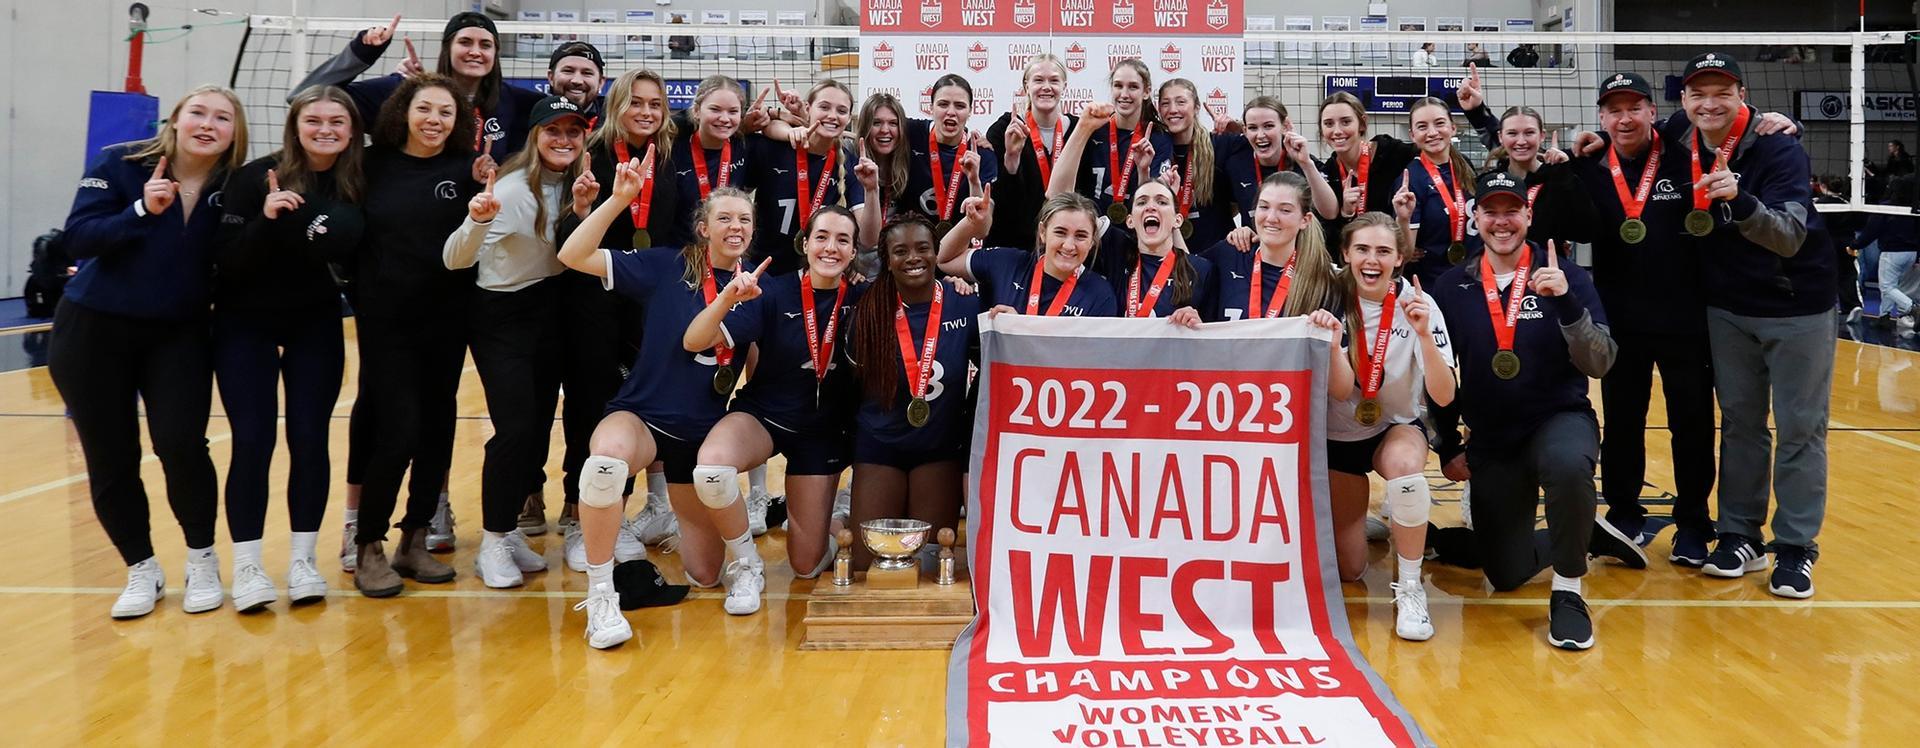 Trinity Western University claimed the 2022-23 Canada West title. Photo via TWU.